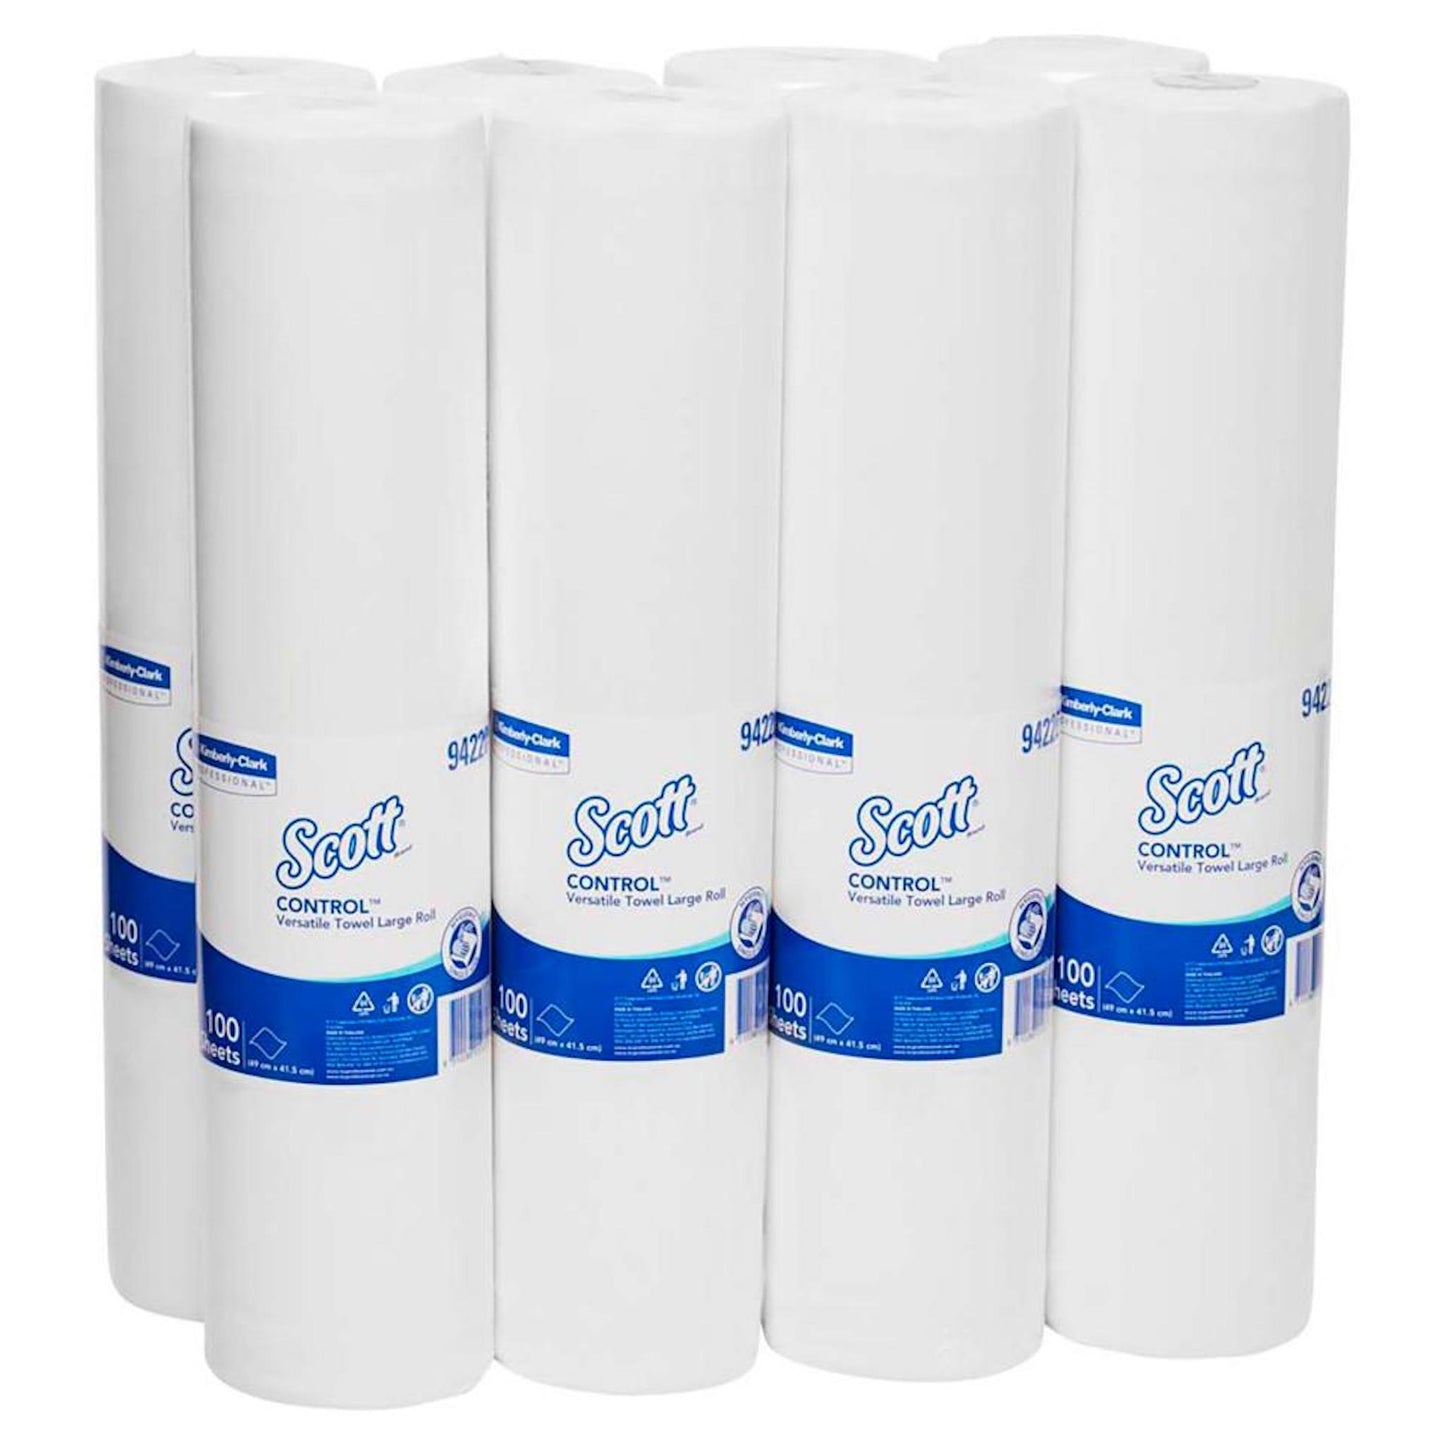 Scott Control 94220 Versatile Towel Large Roll Mulitipurpose Wipe 100 Sheets White Carton 8